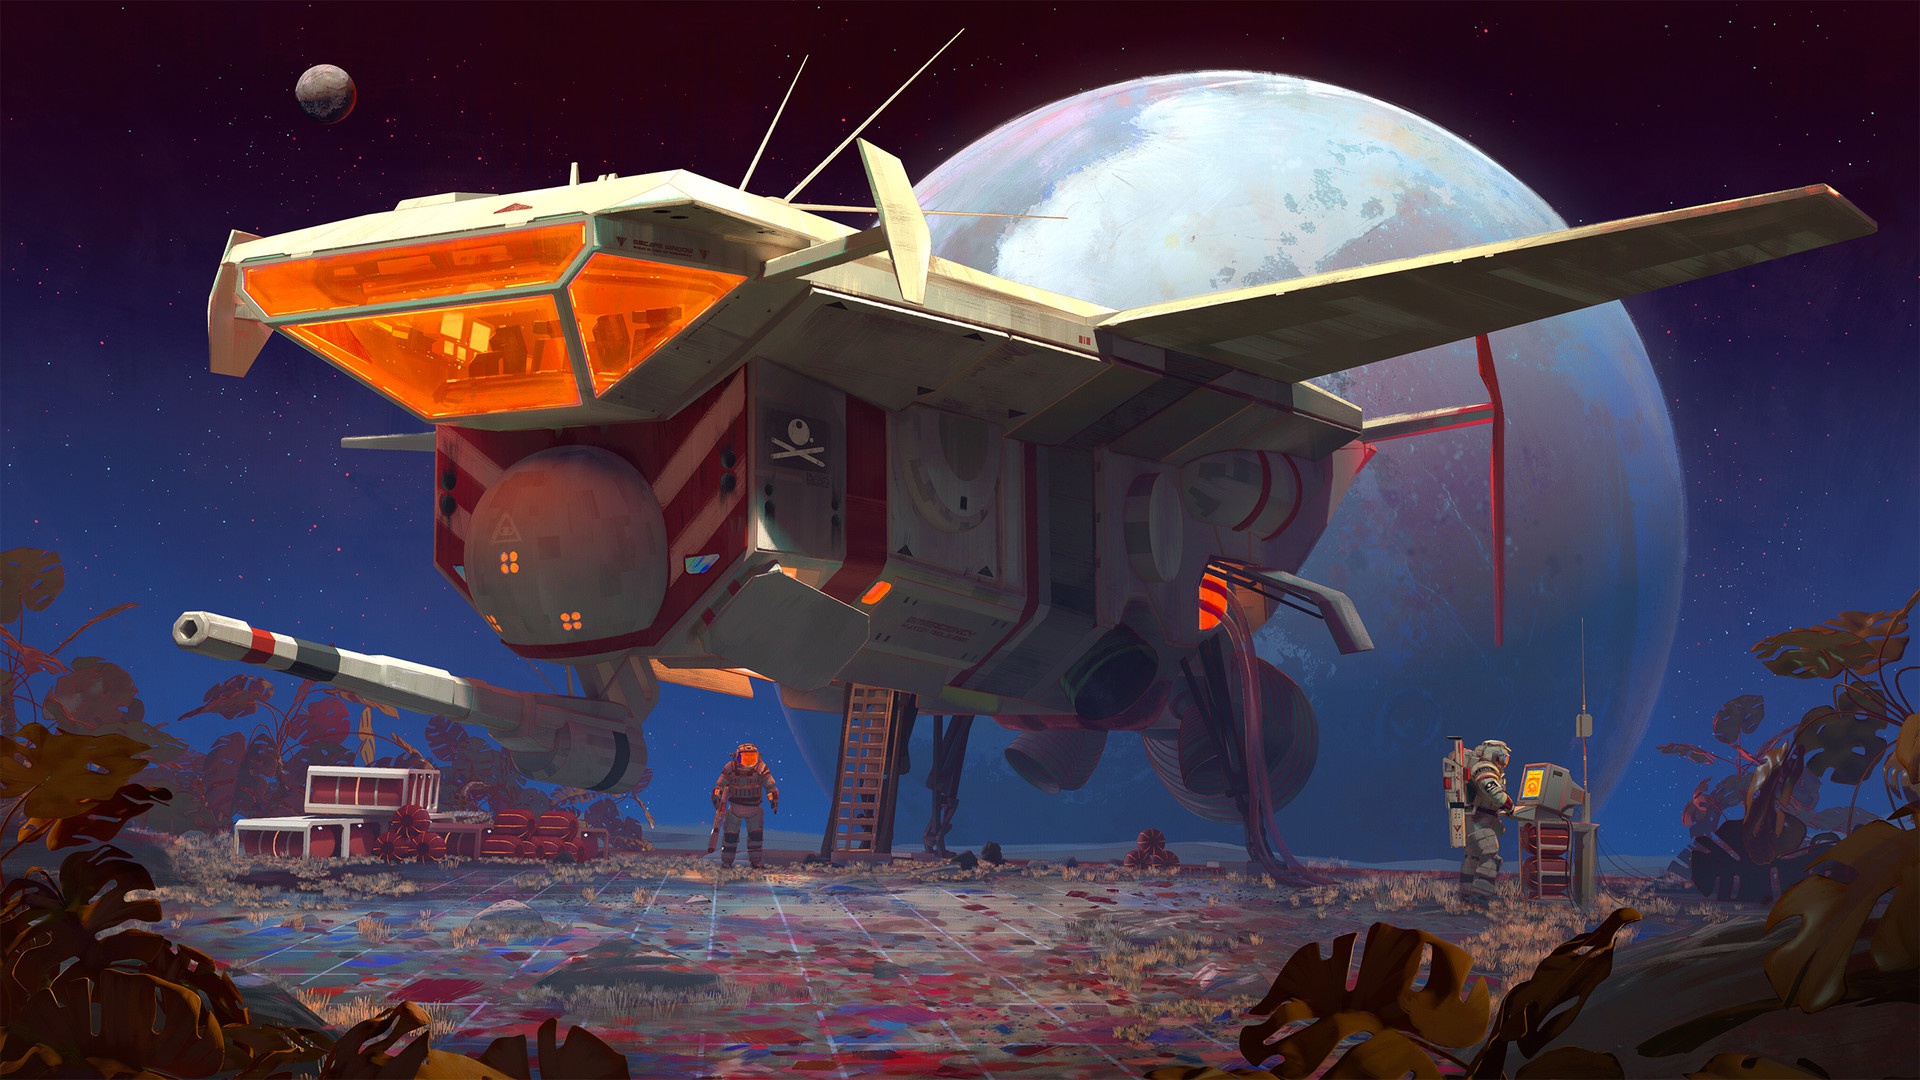 Setting up an outpost on an alien planet by Maciej Rebisz